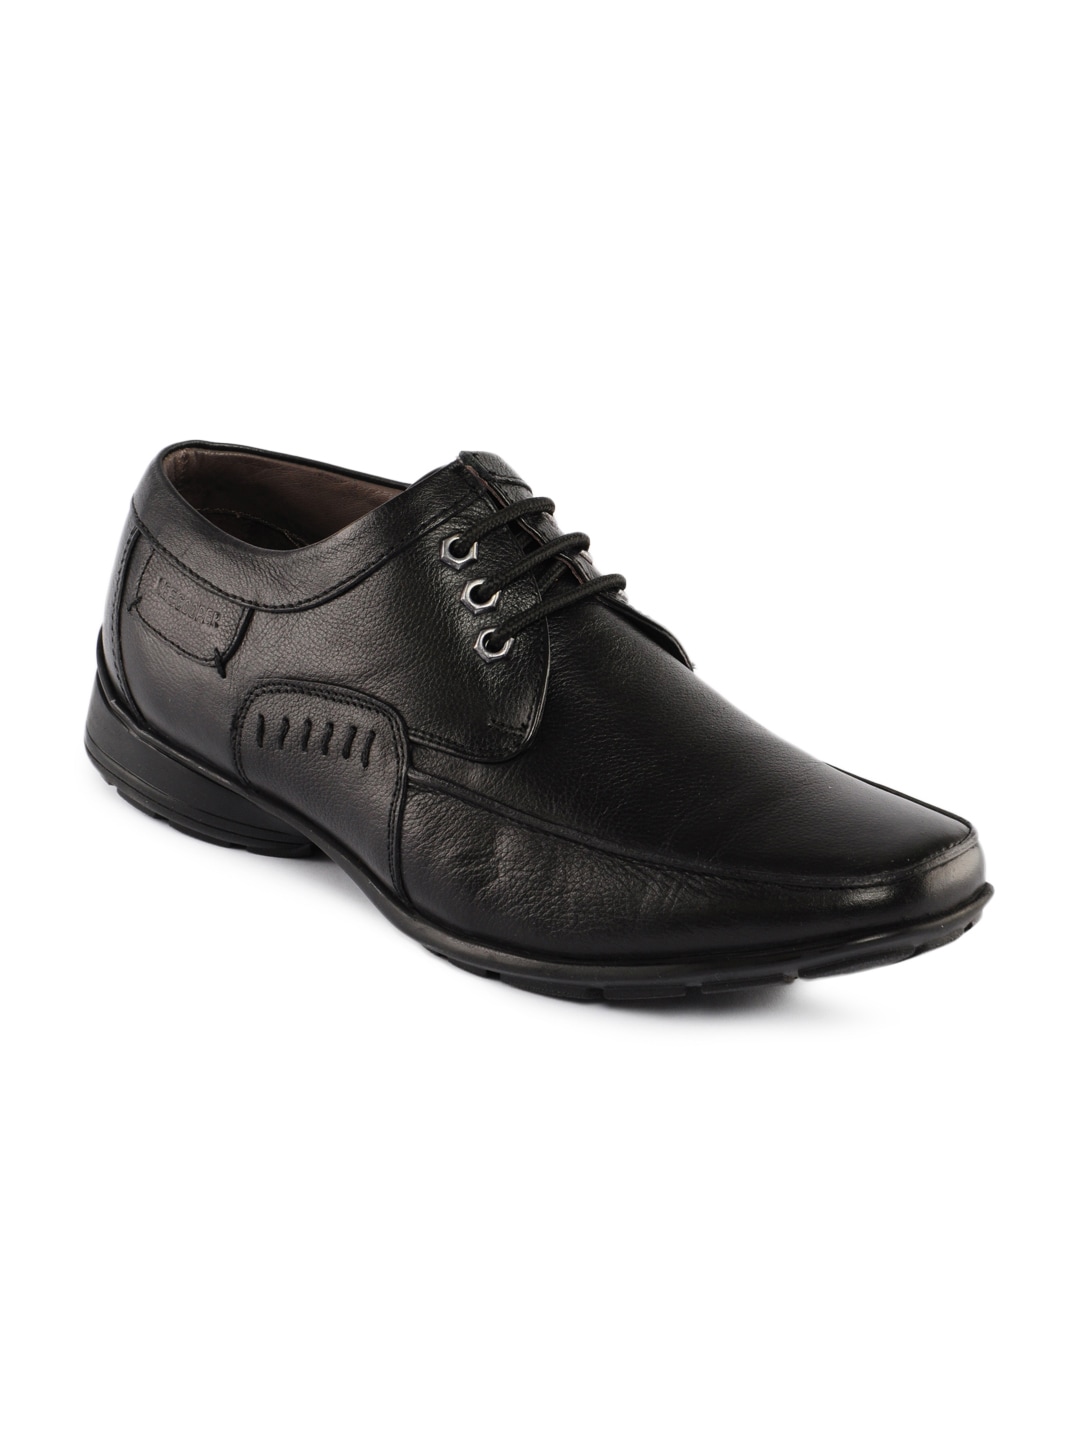 Lee Cooper Men Black Casual Shoes